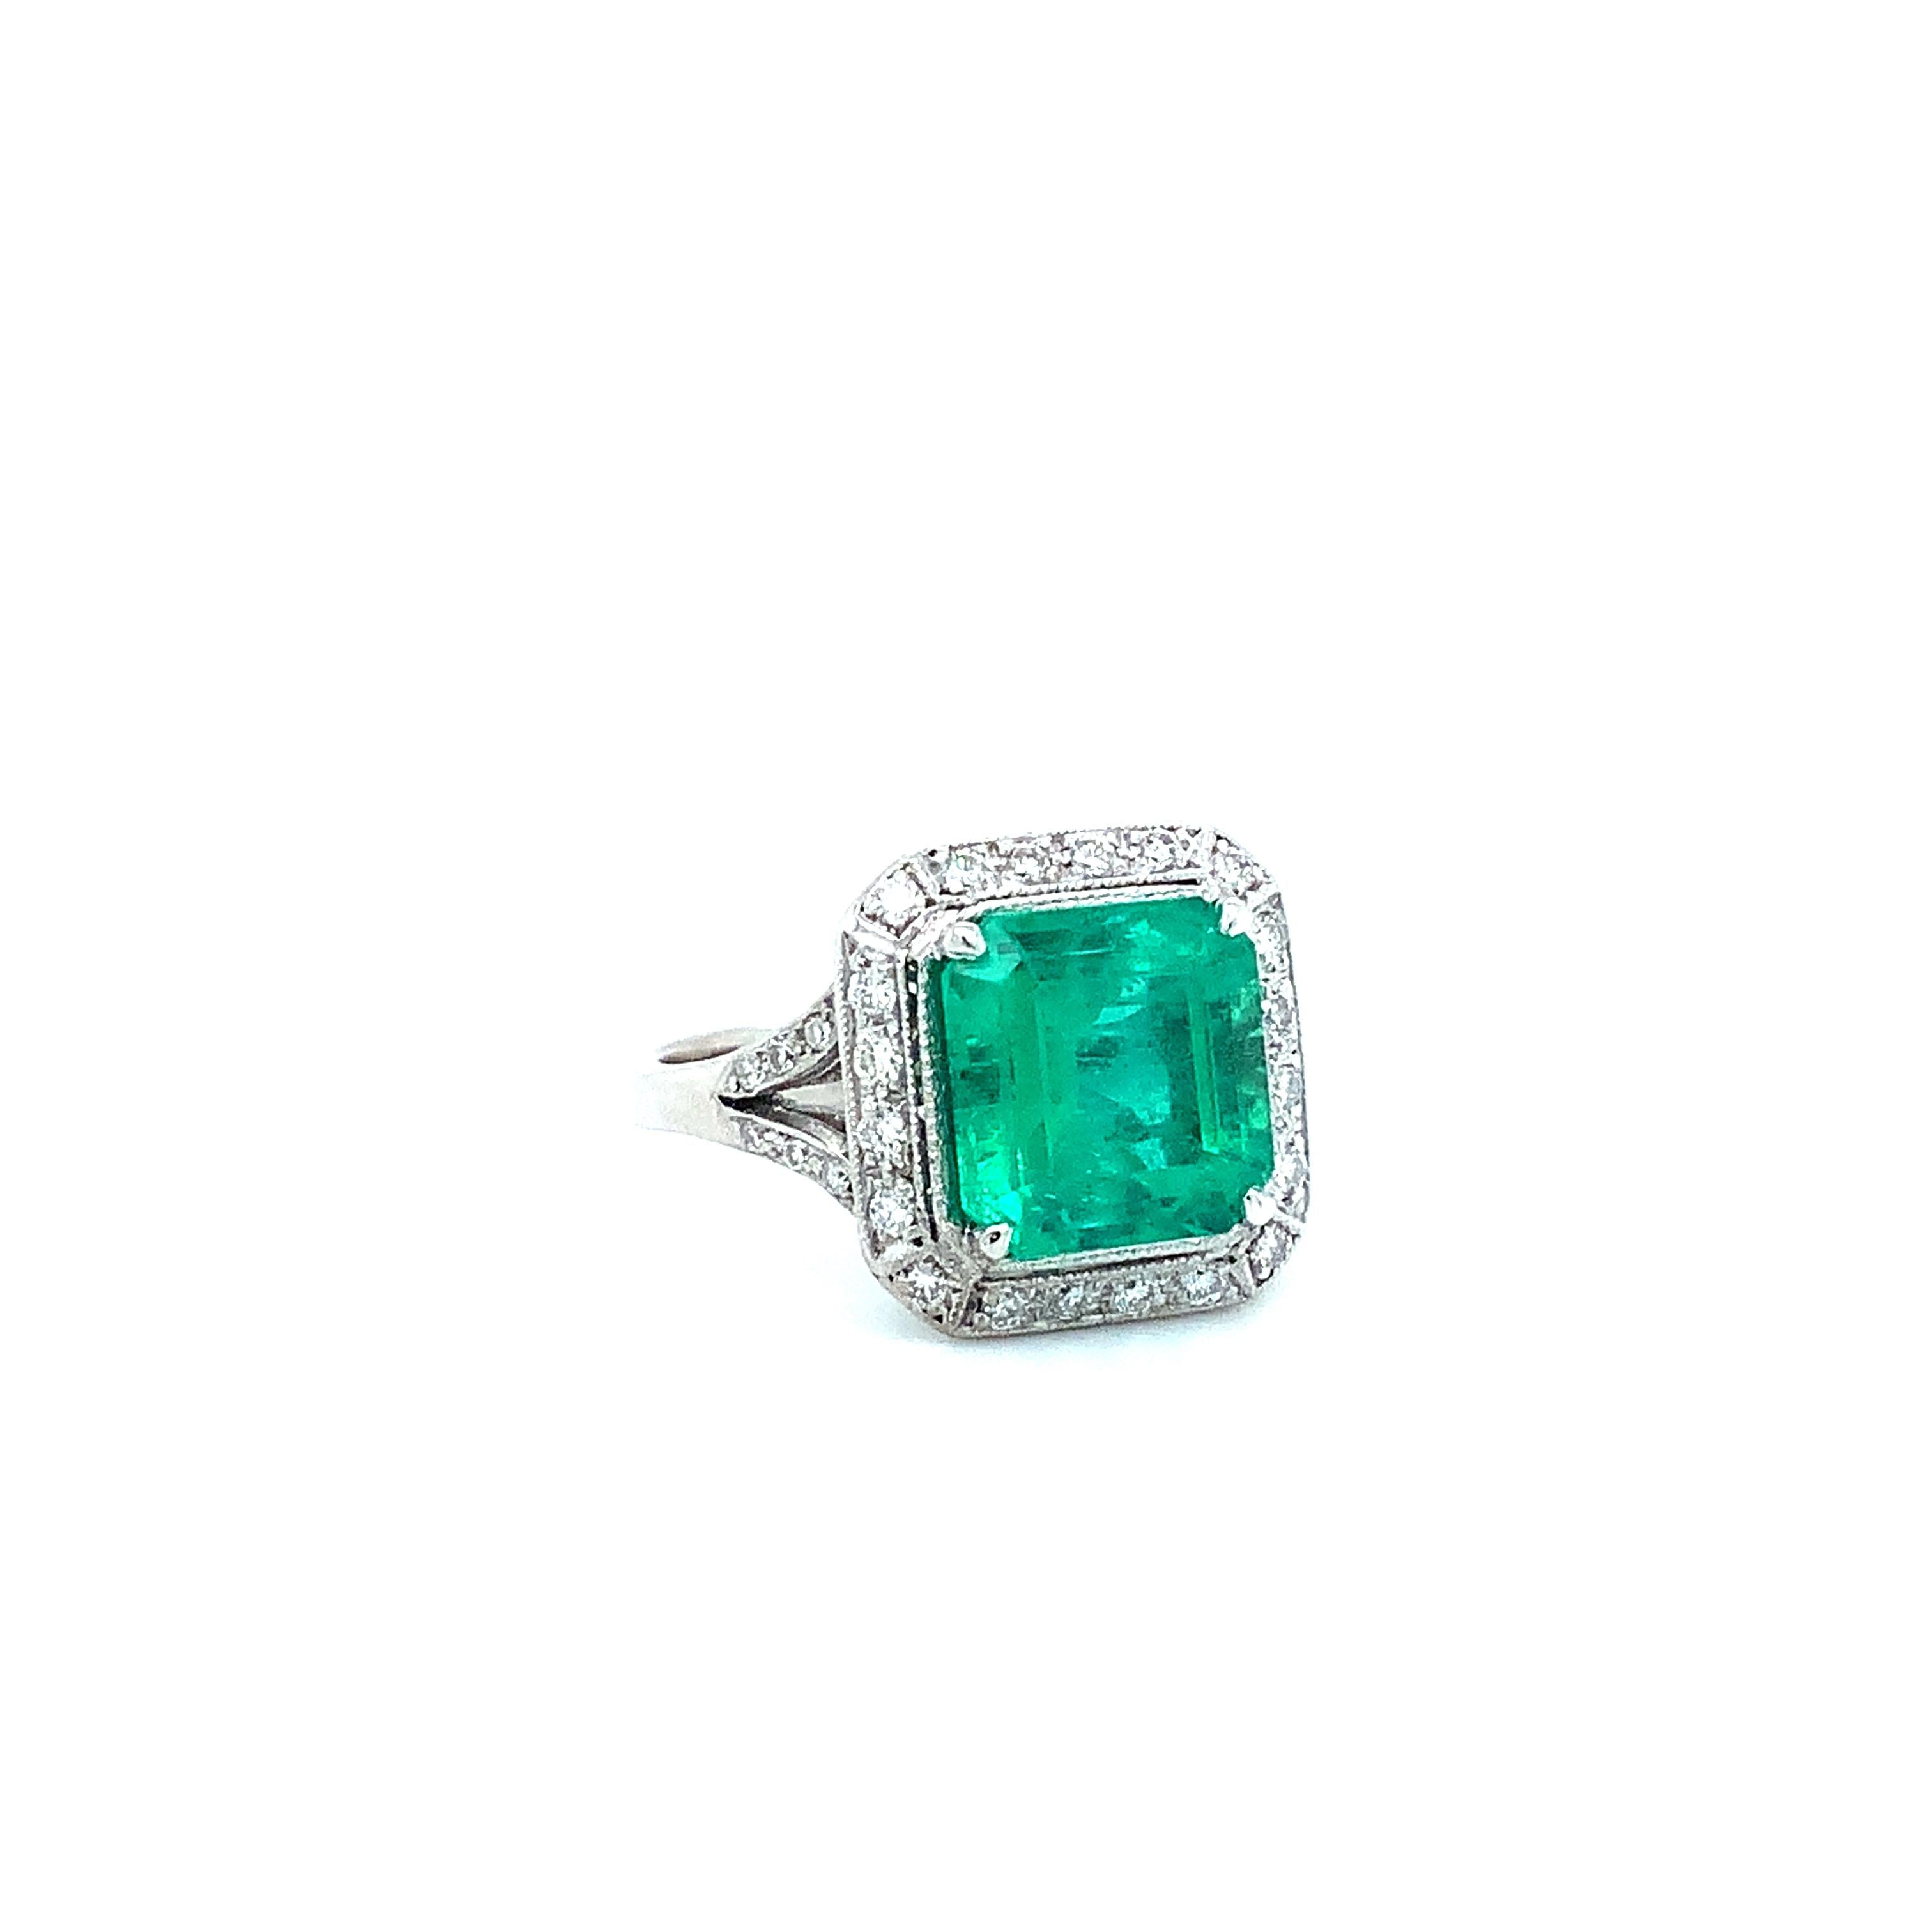 3.19 Carat Vintage Emerald and Diamond Ring Set in 18 Karat White Gold For Sale 3